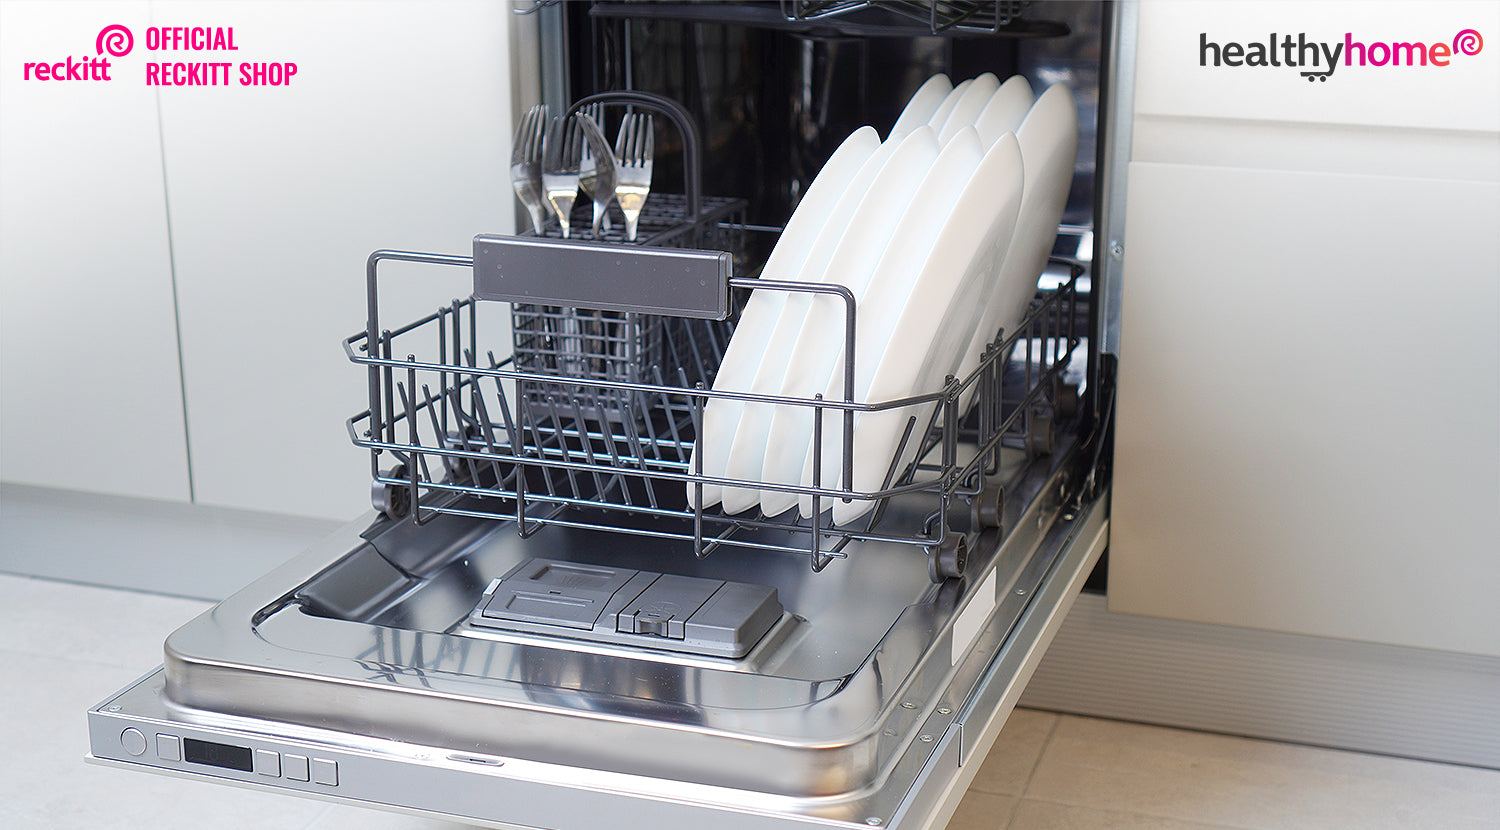 How to use Dishwasher